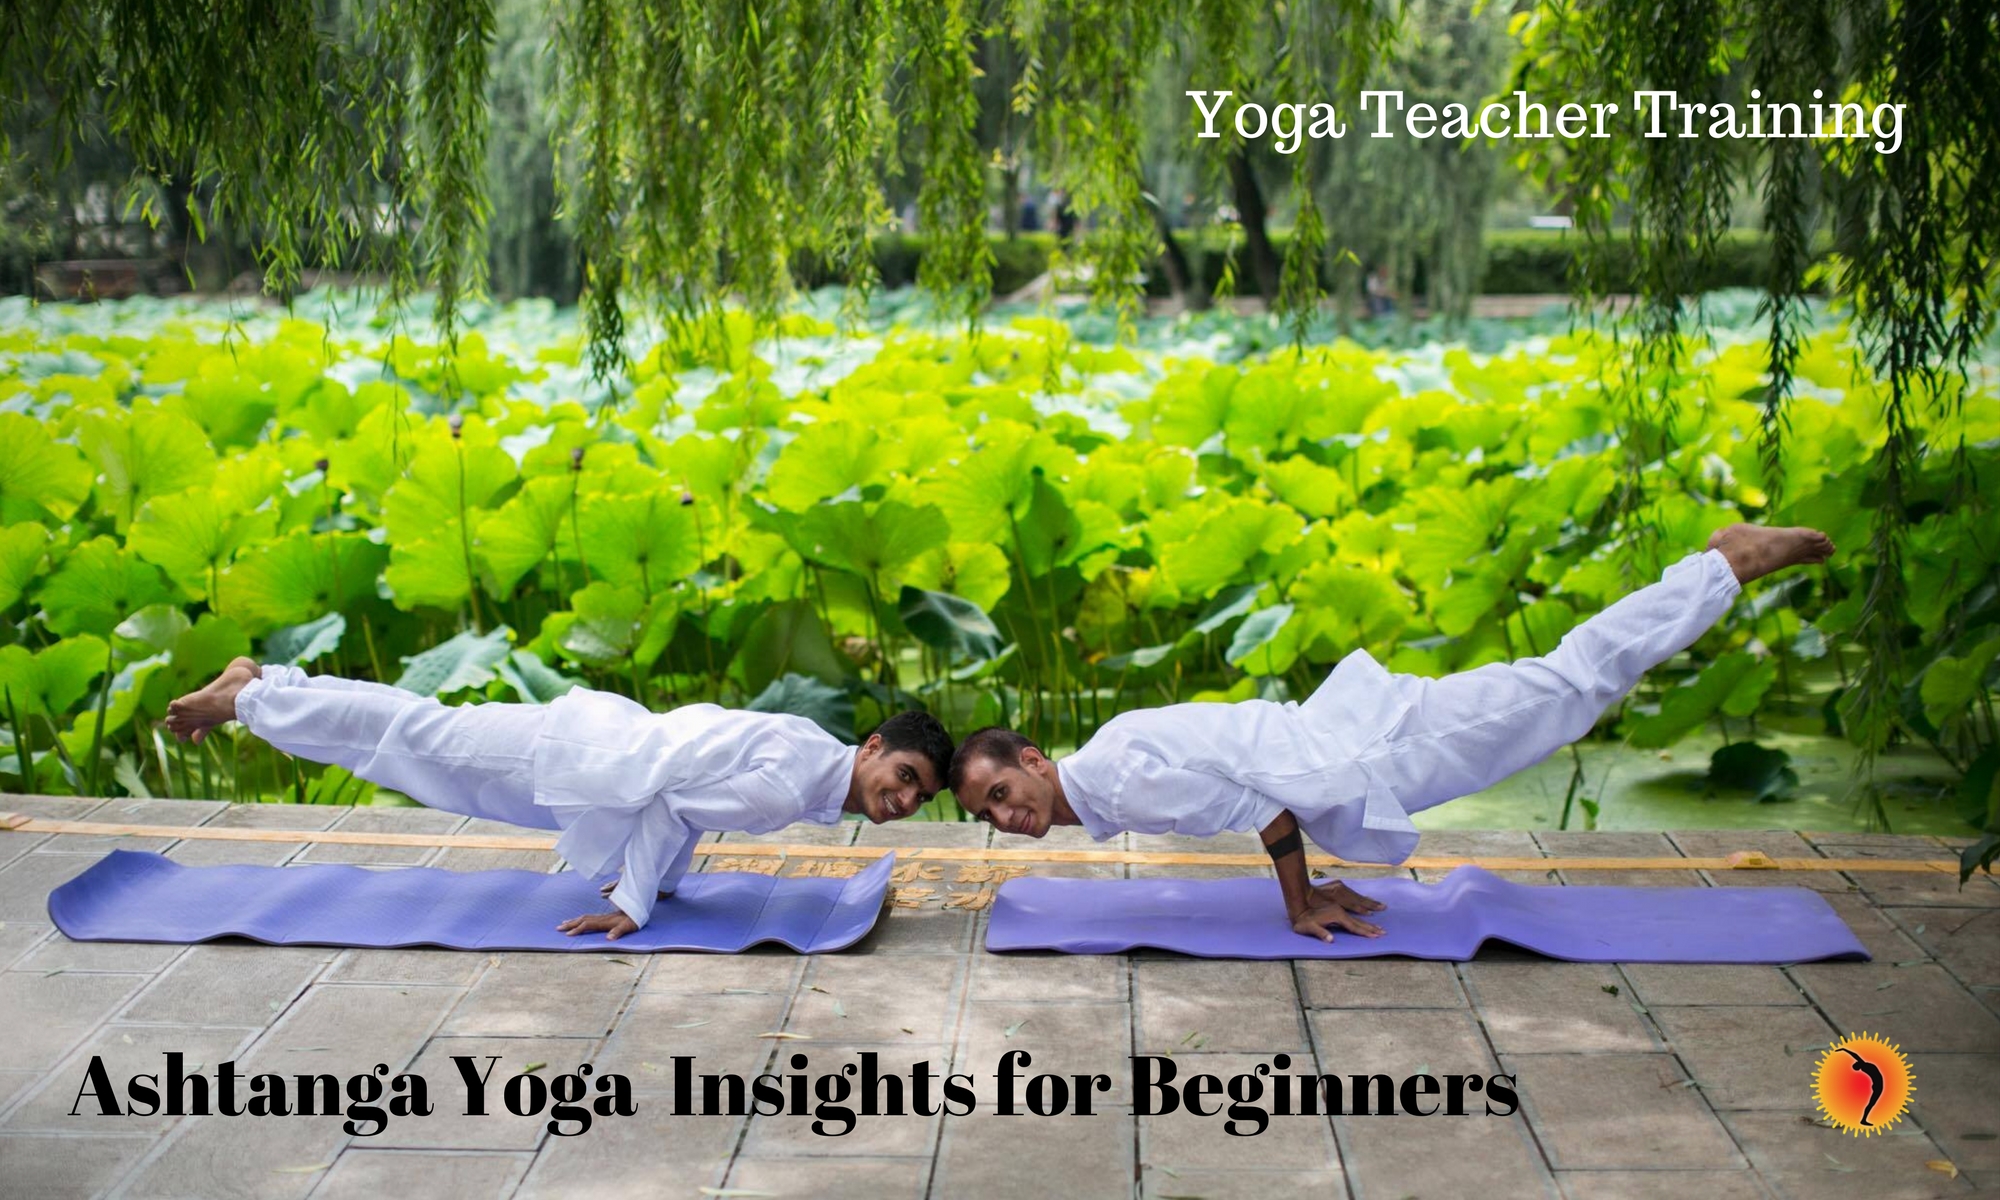 ashtanga yoga teacher training in India